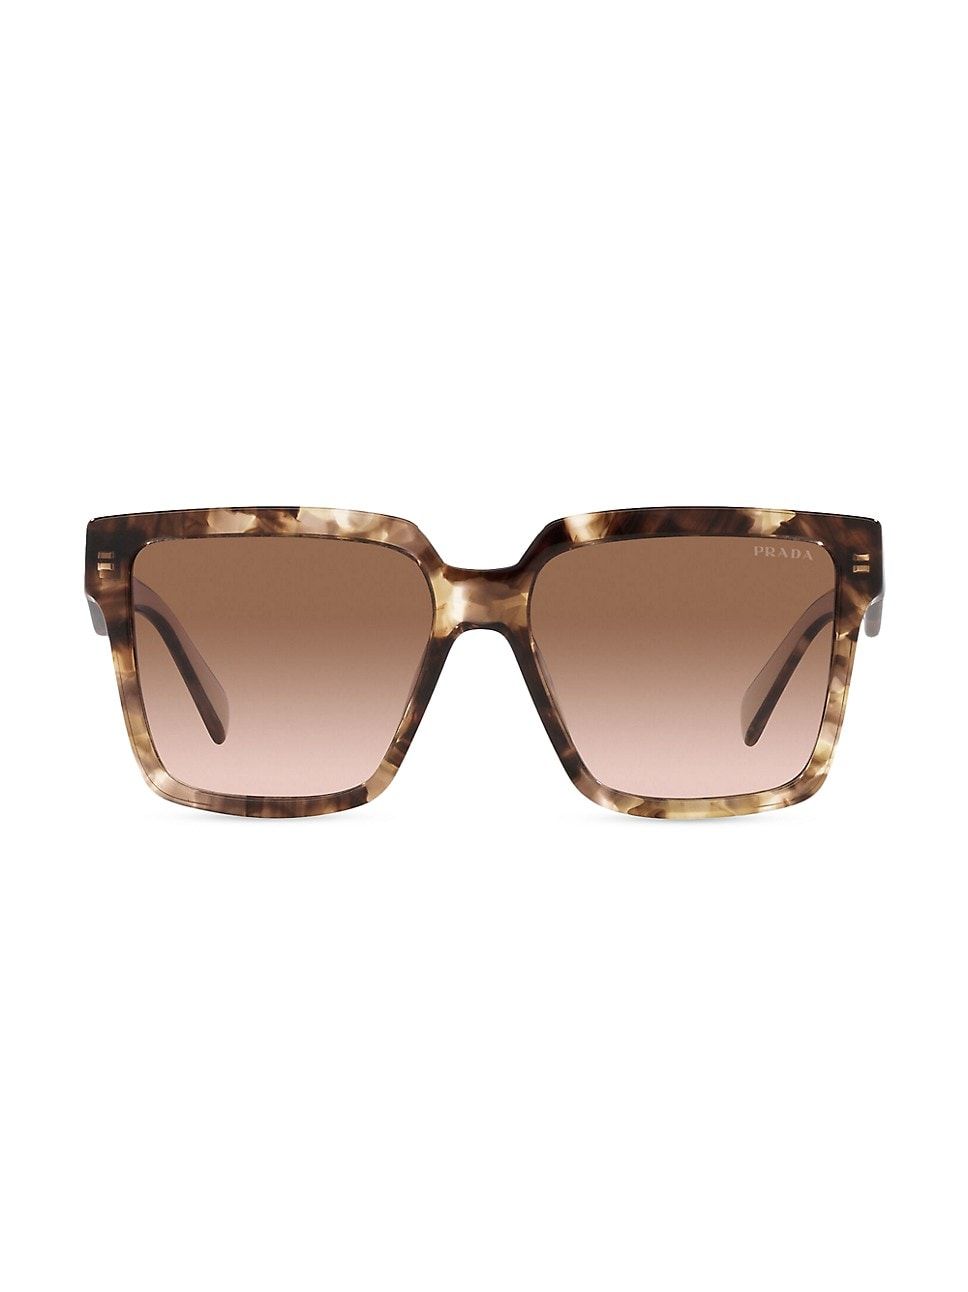 Prada 56MM Square Sunglasses | Saks Fifth Avenue